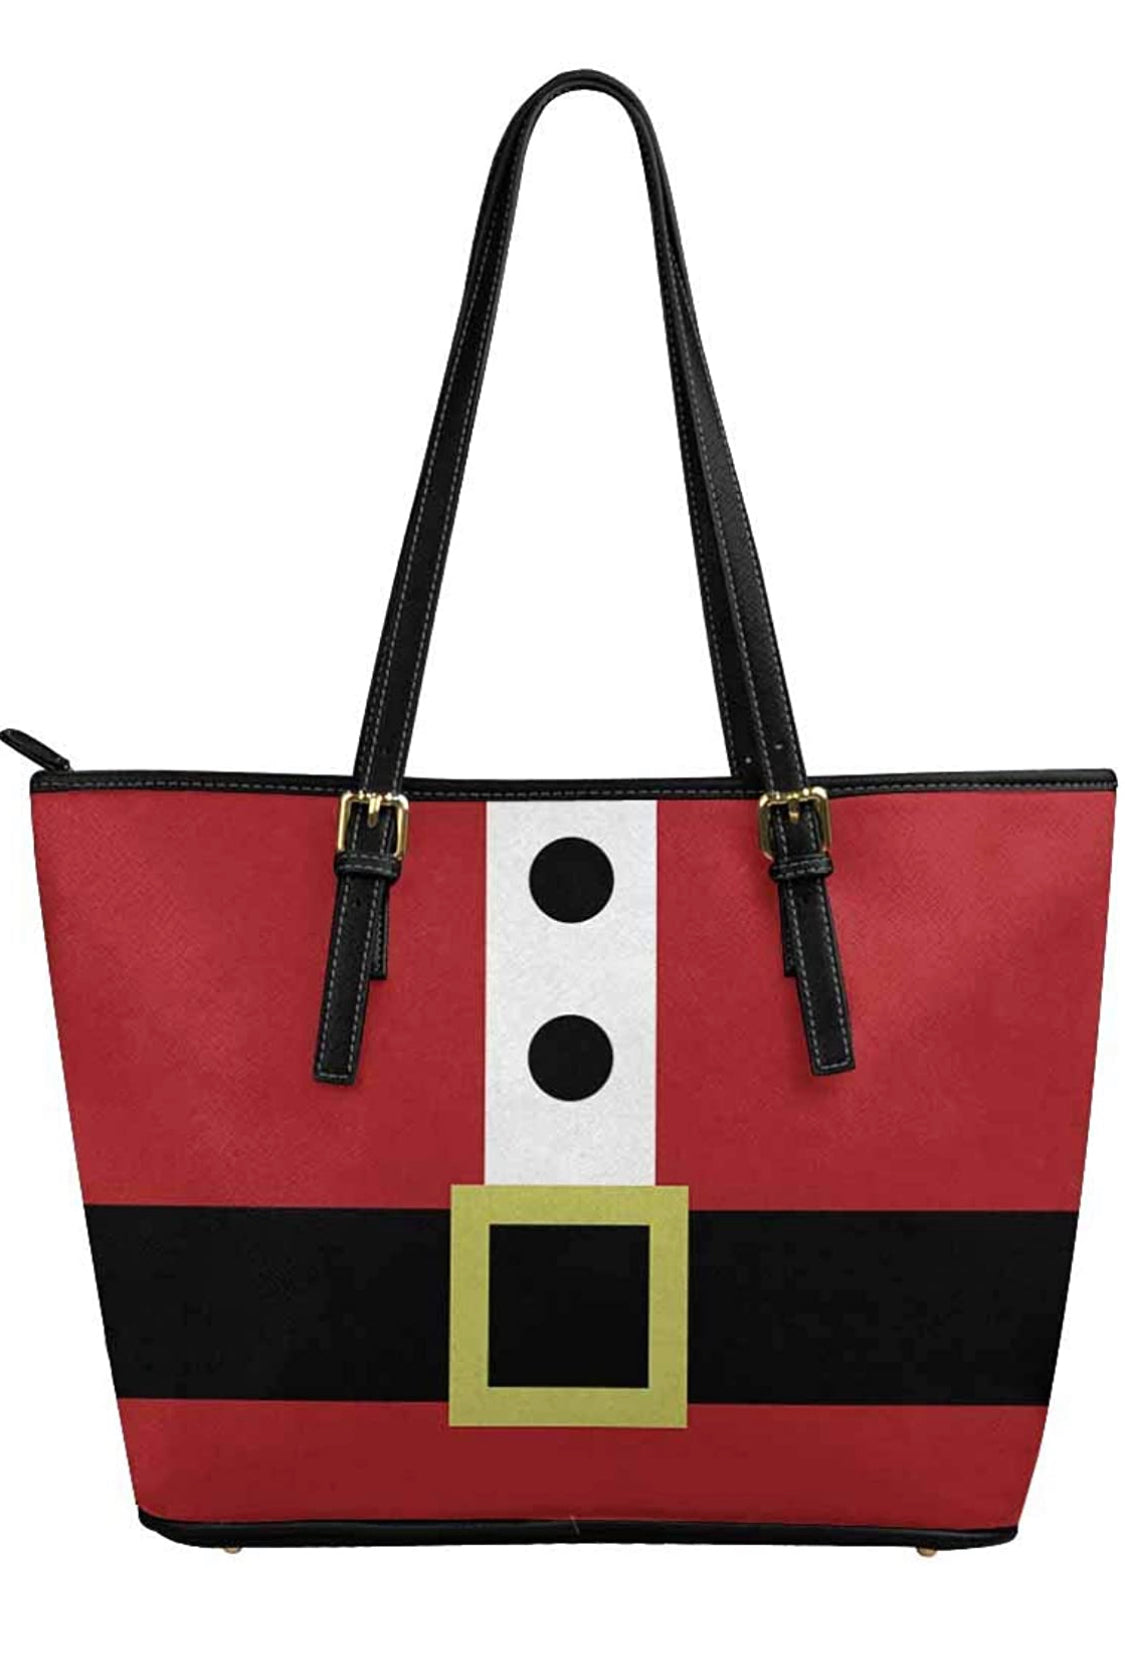 Amazon.com: Zip Handbags for Women Christmas Winter Chain Shoulder Bag  Womens Tote Clutch Purses : Clothing, Shoes & Jewelry